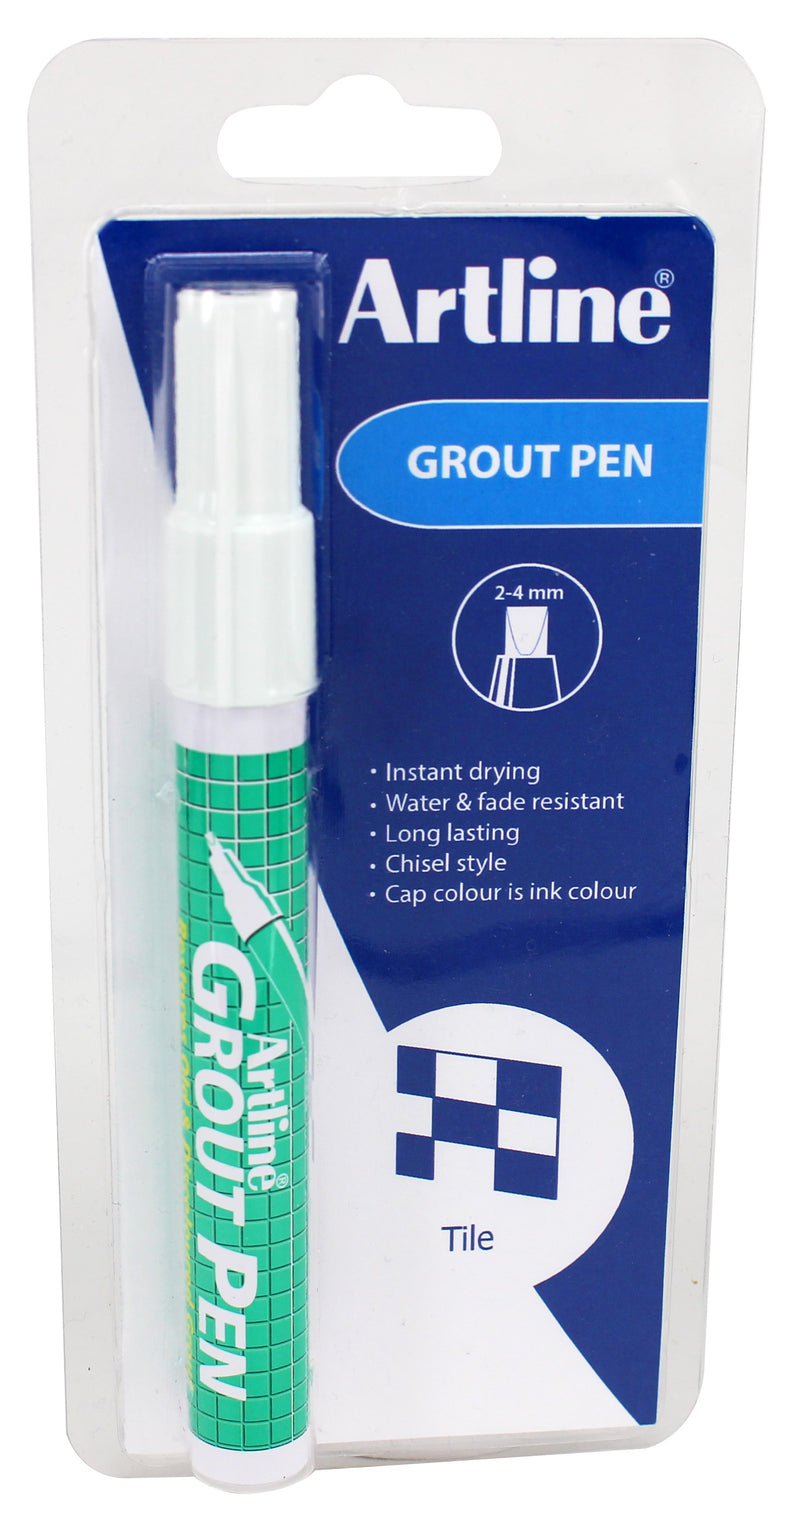 Artline 419/1B Grout Pen grey